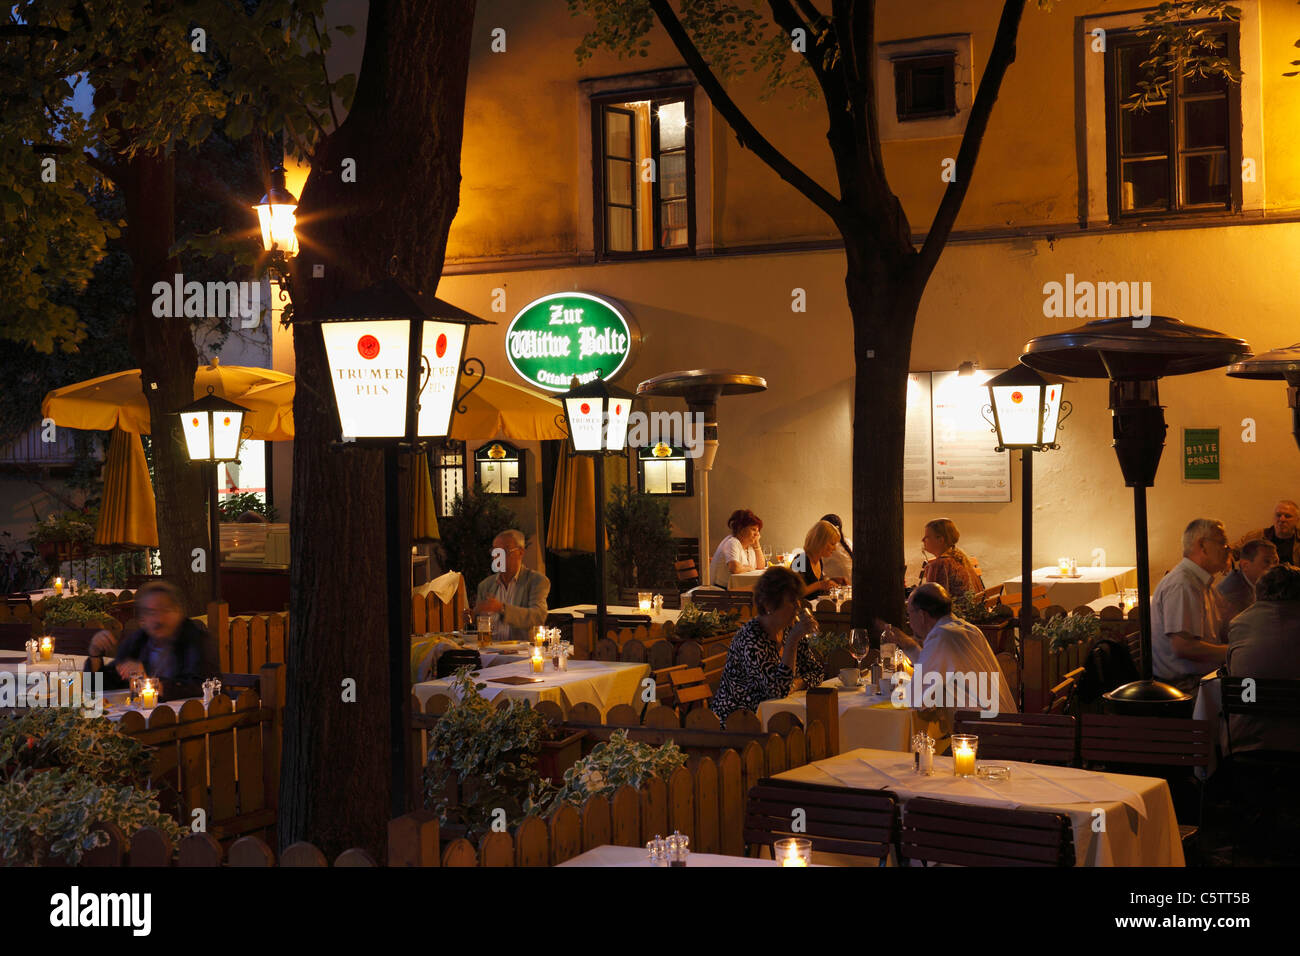 Austria, Vienna, Salzkammergut, People in restaurant at night Stock Photo